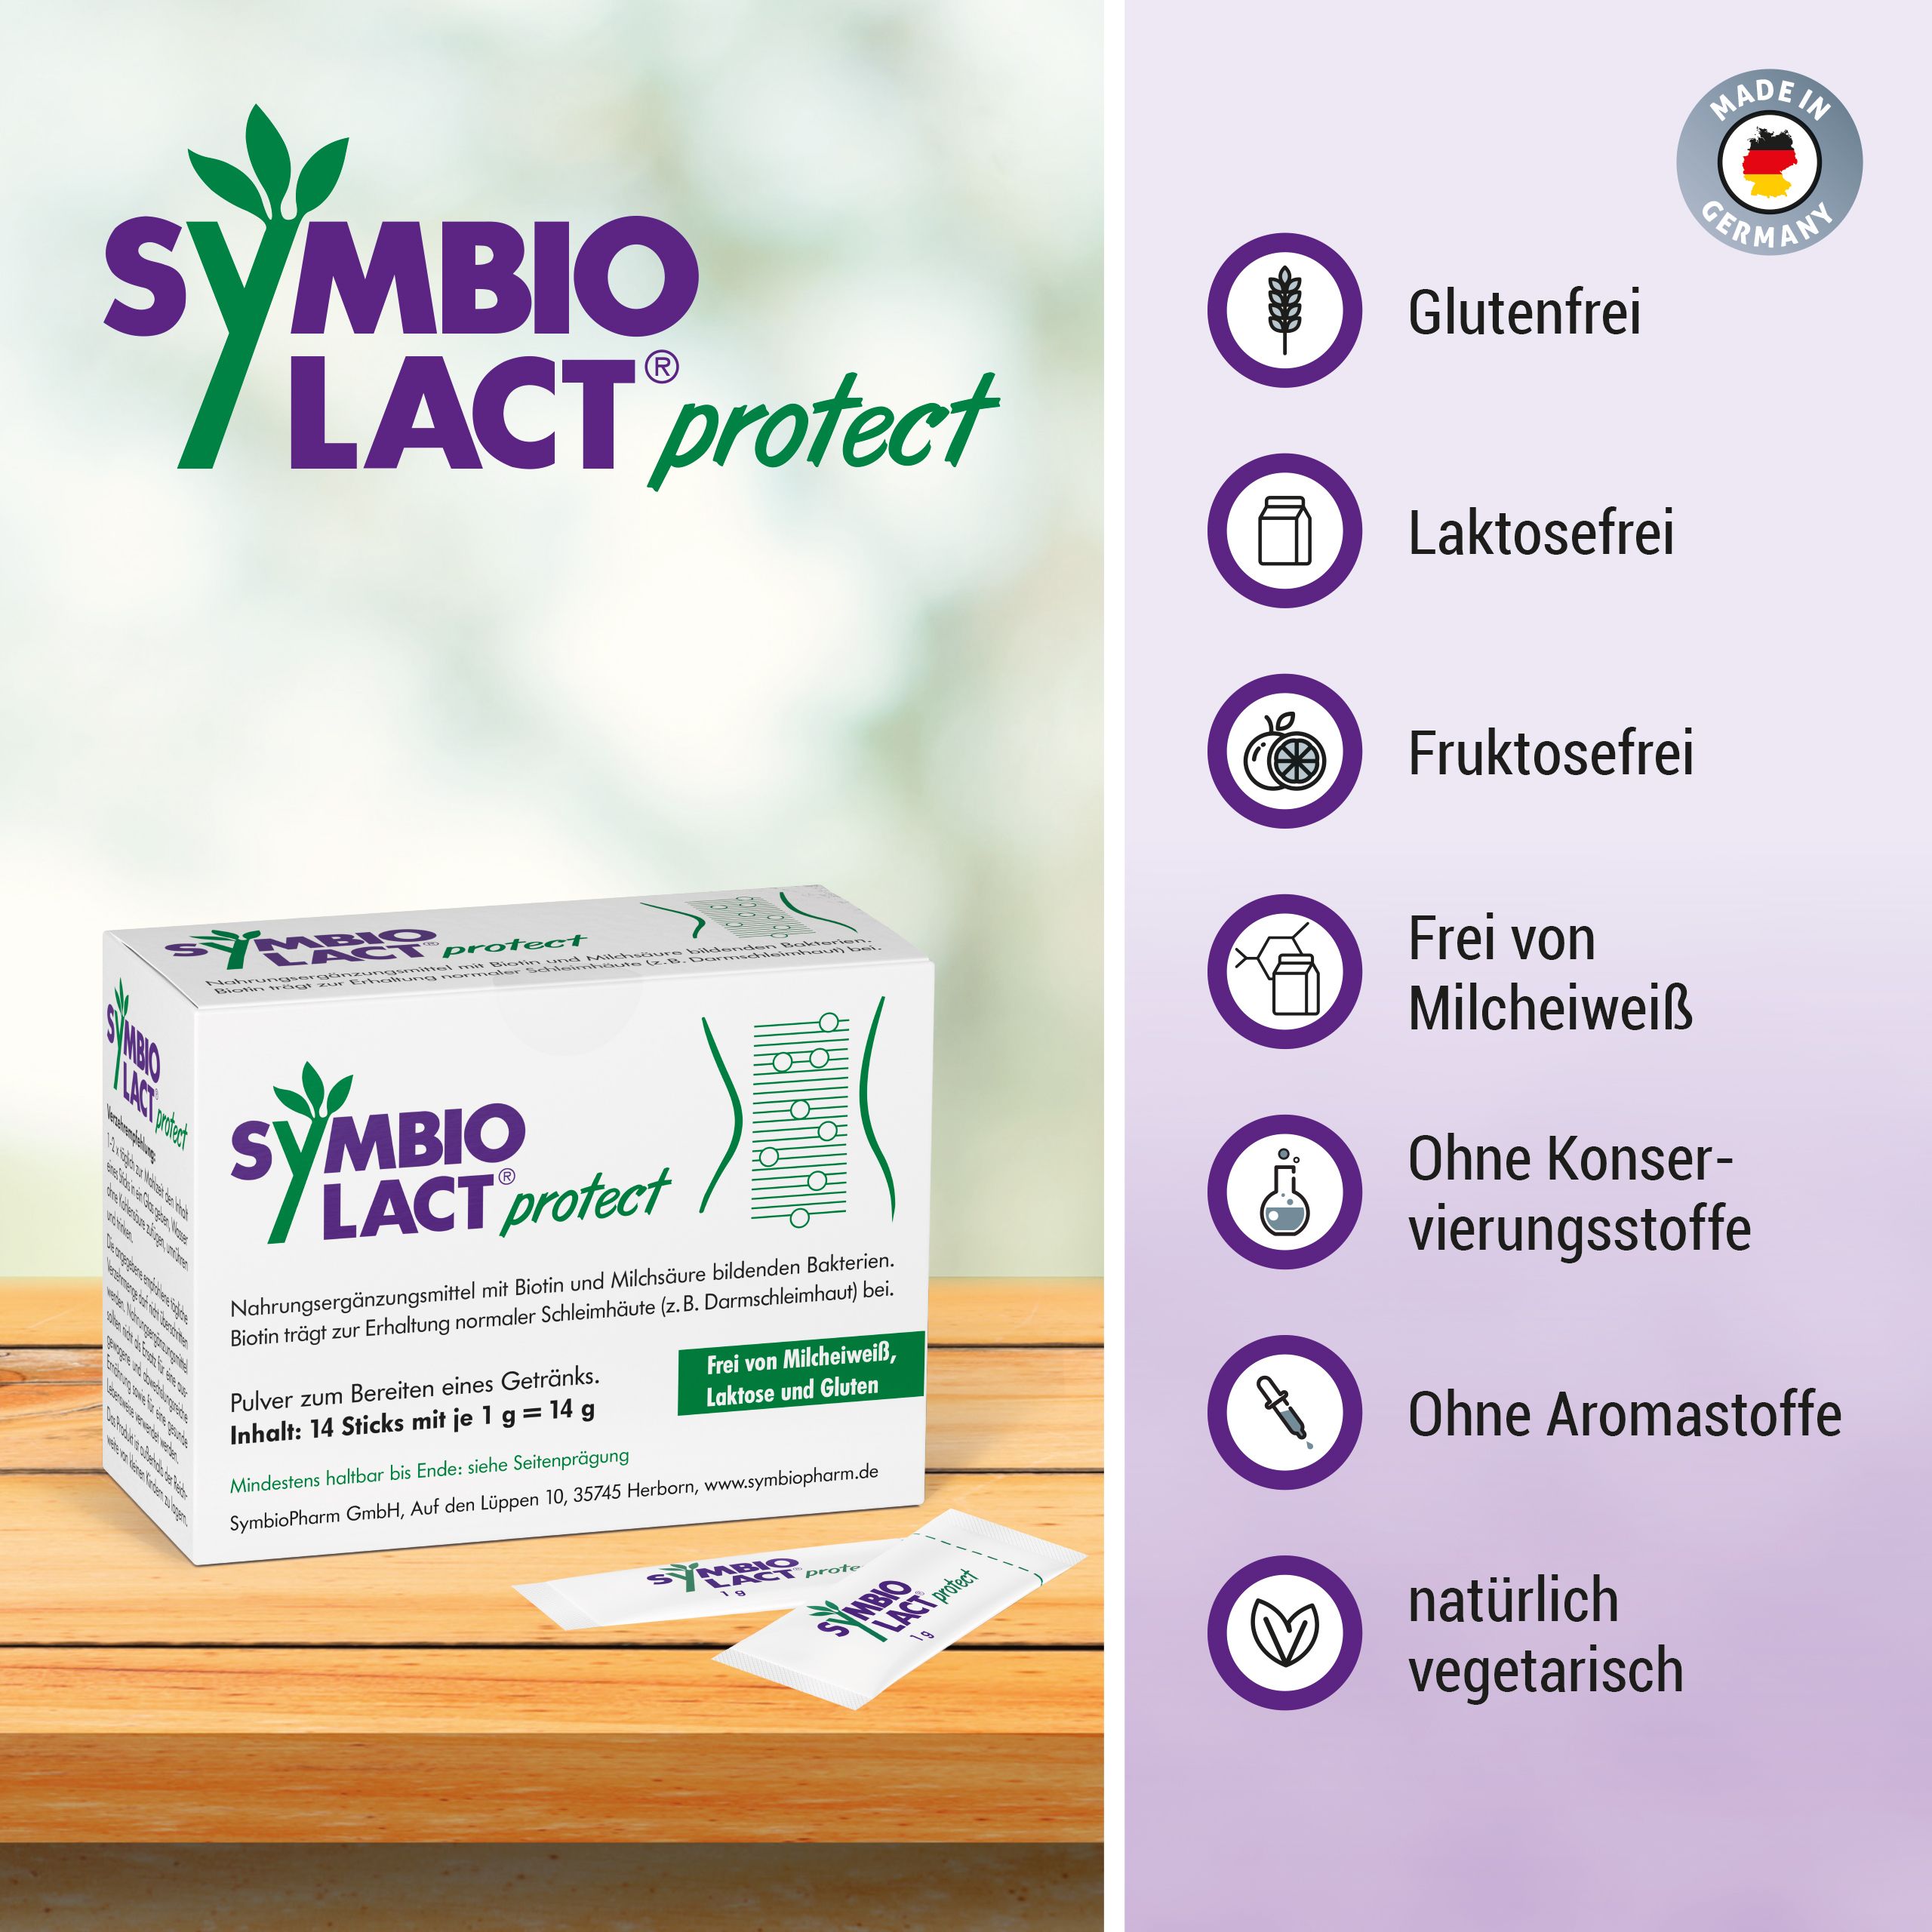 SymbioLact® Protect